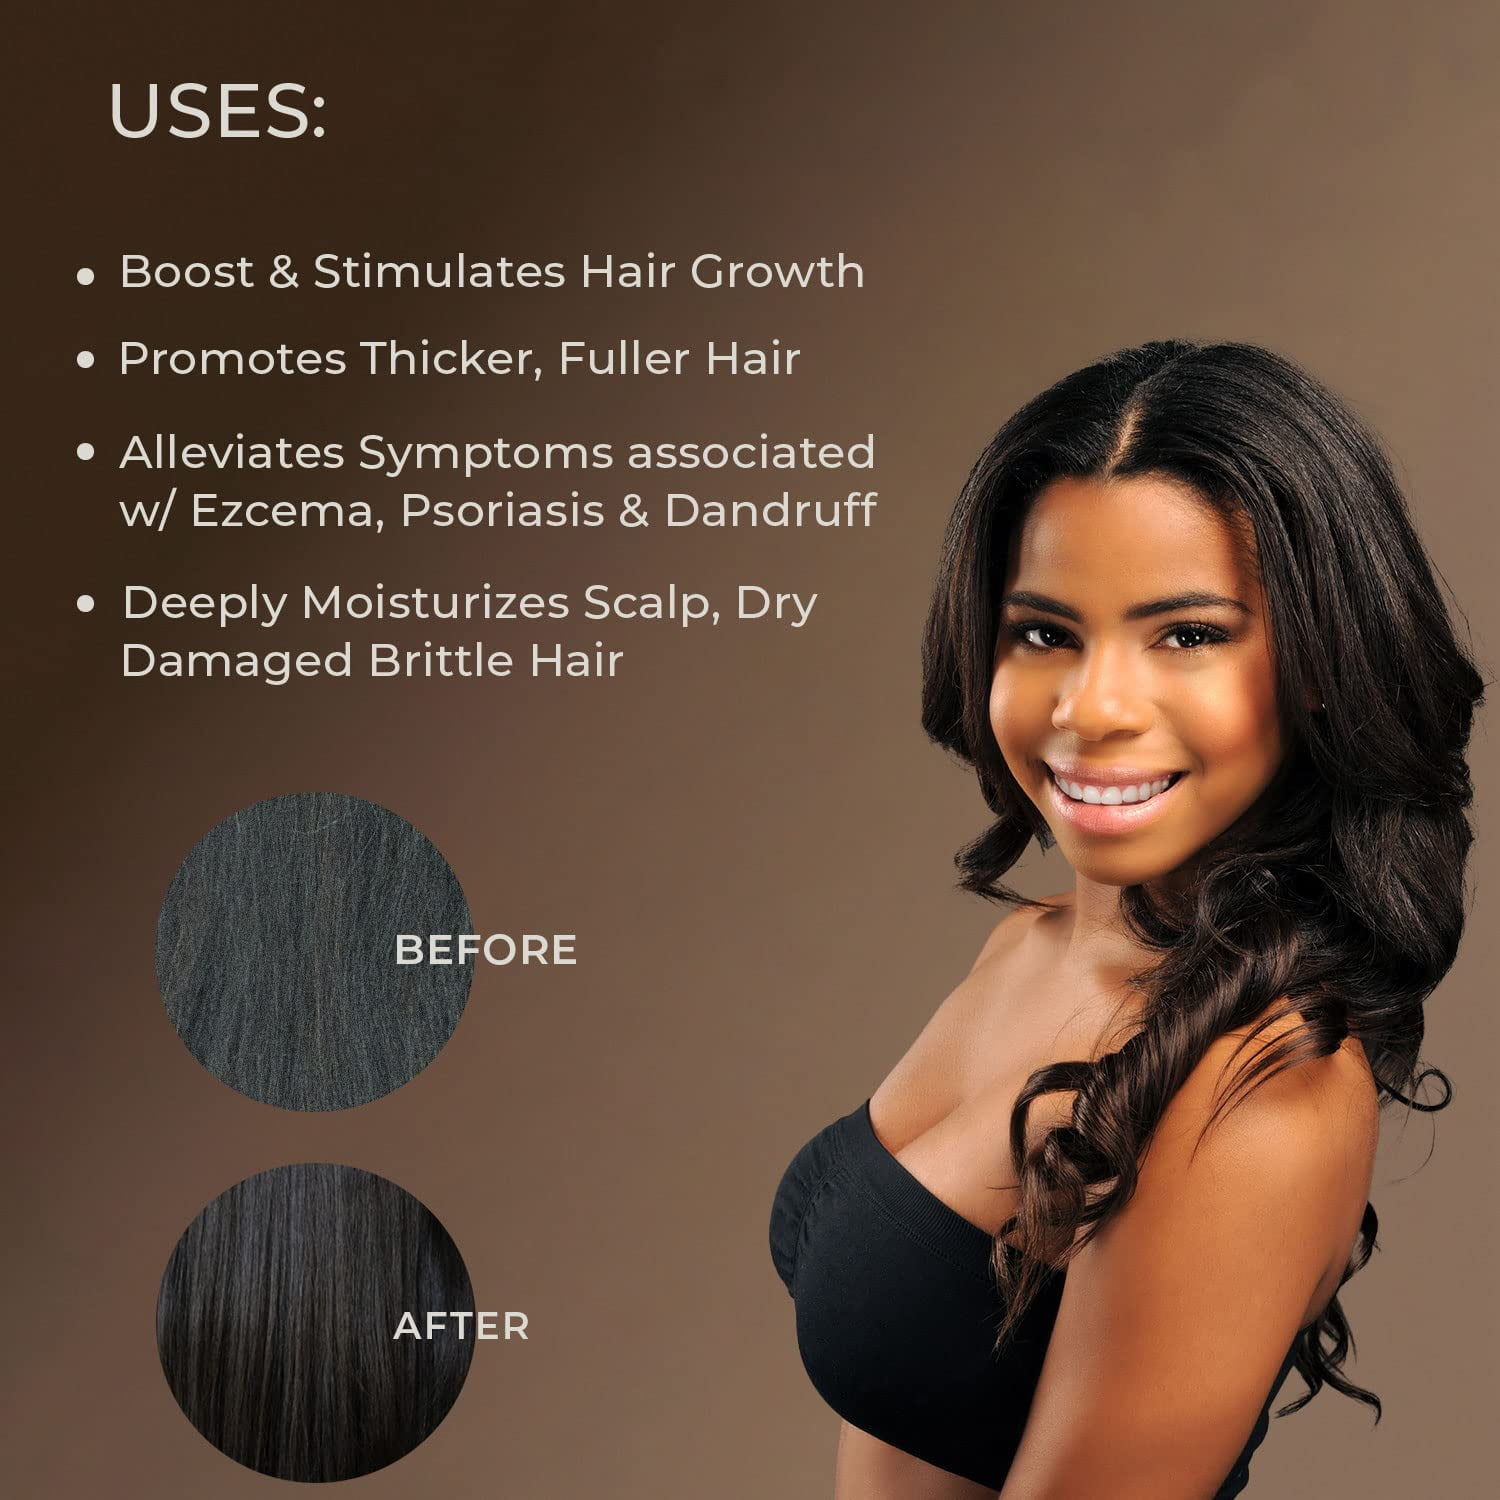 Bakson Sunny Arnica Hair Oil Review In Hindi | बैकसन सनी अर्निका हेयर ऑयल  इस्तेमाल करे By @DrArun - YouTube